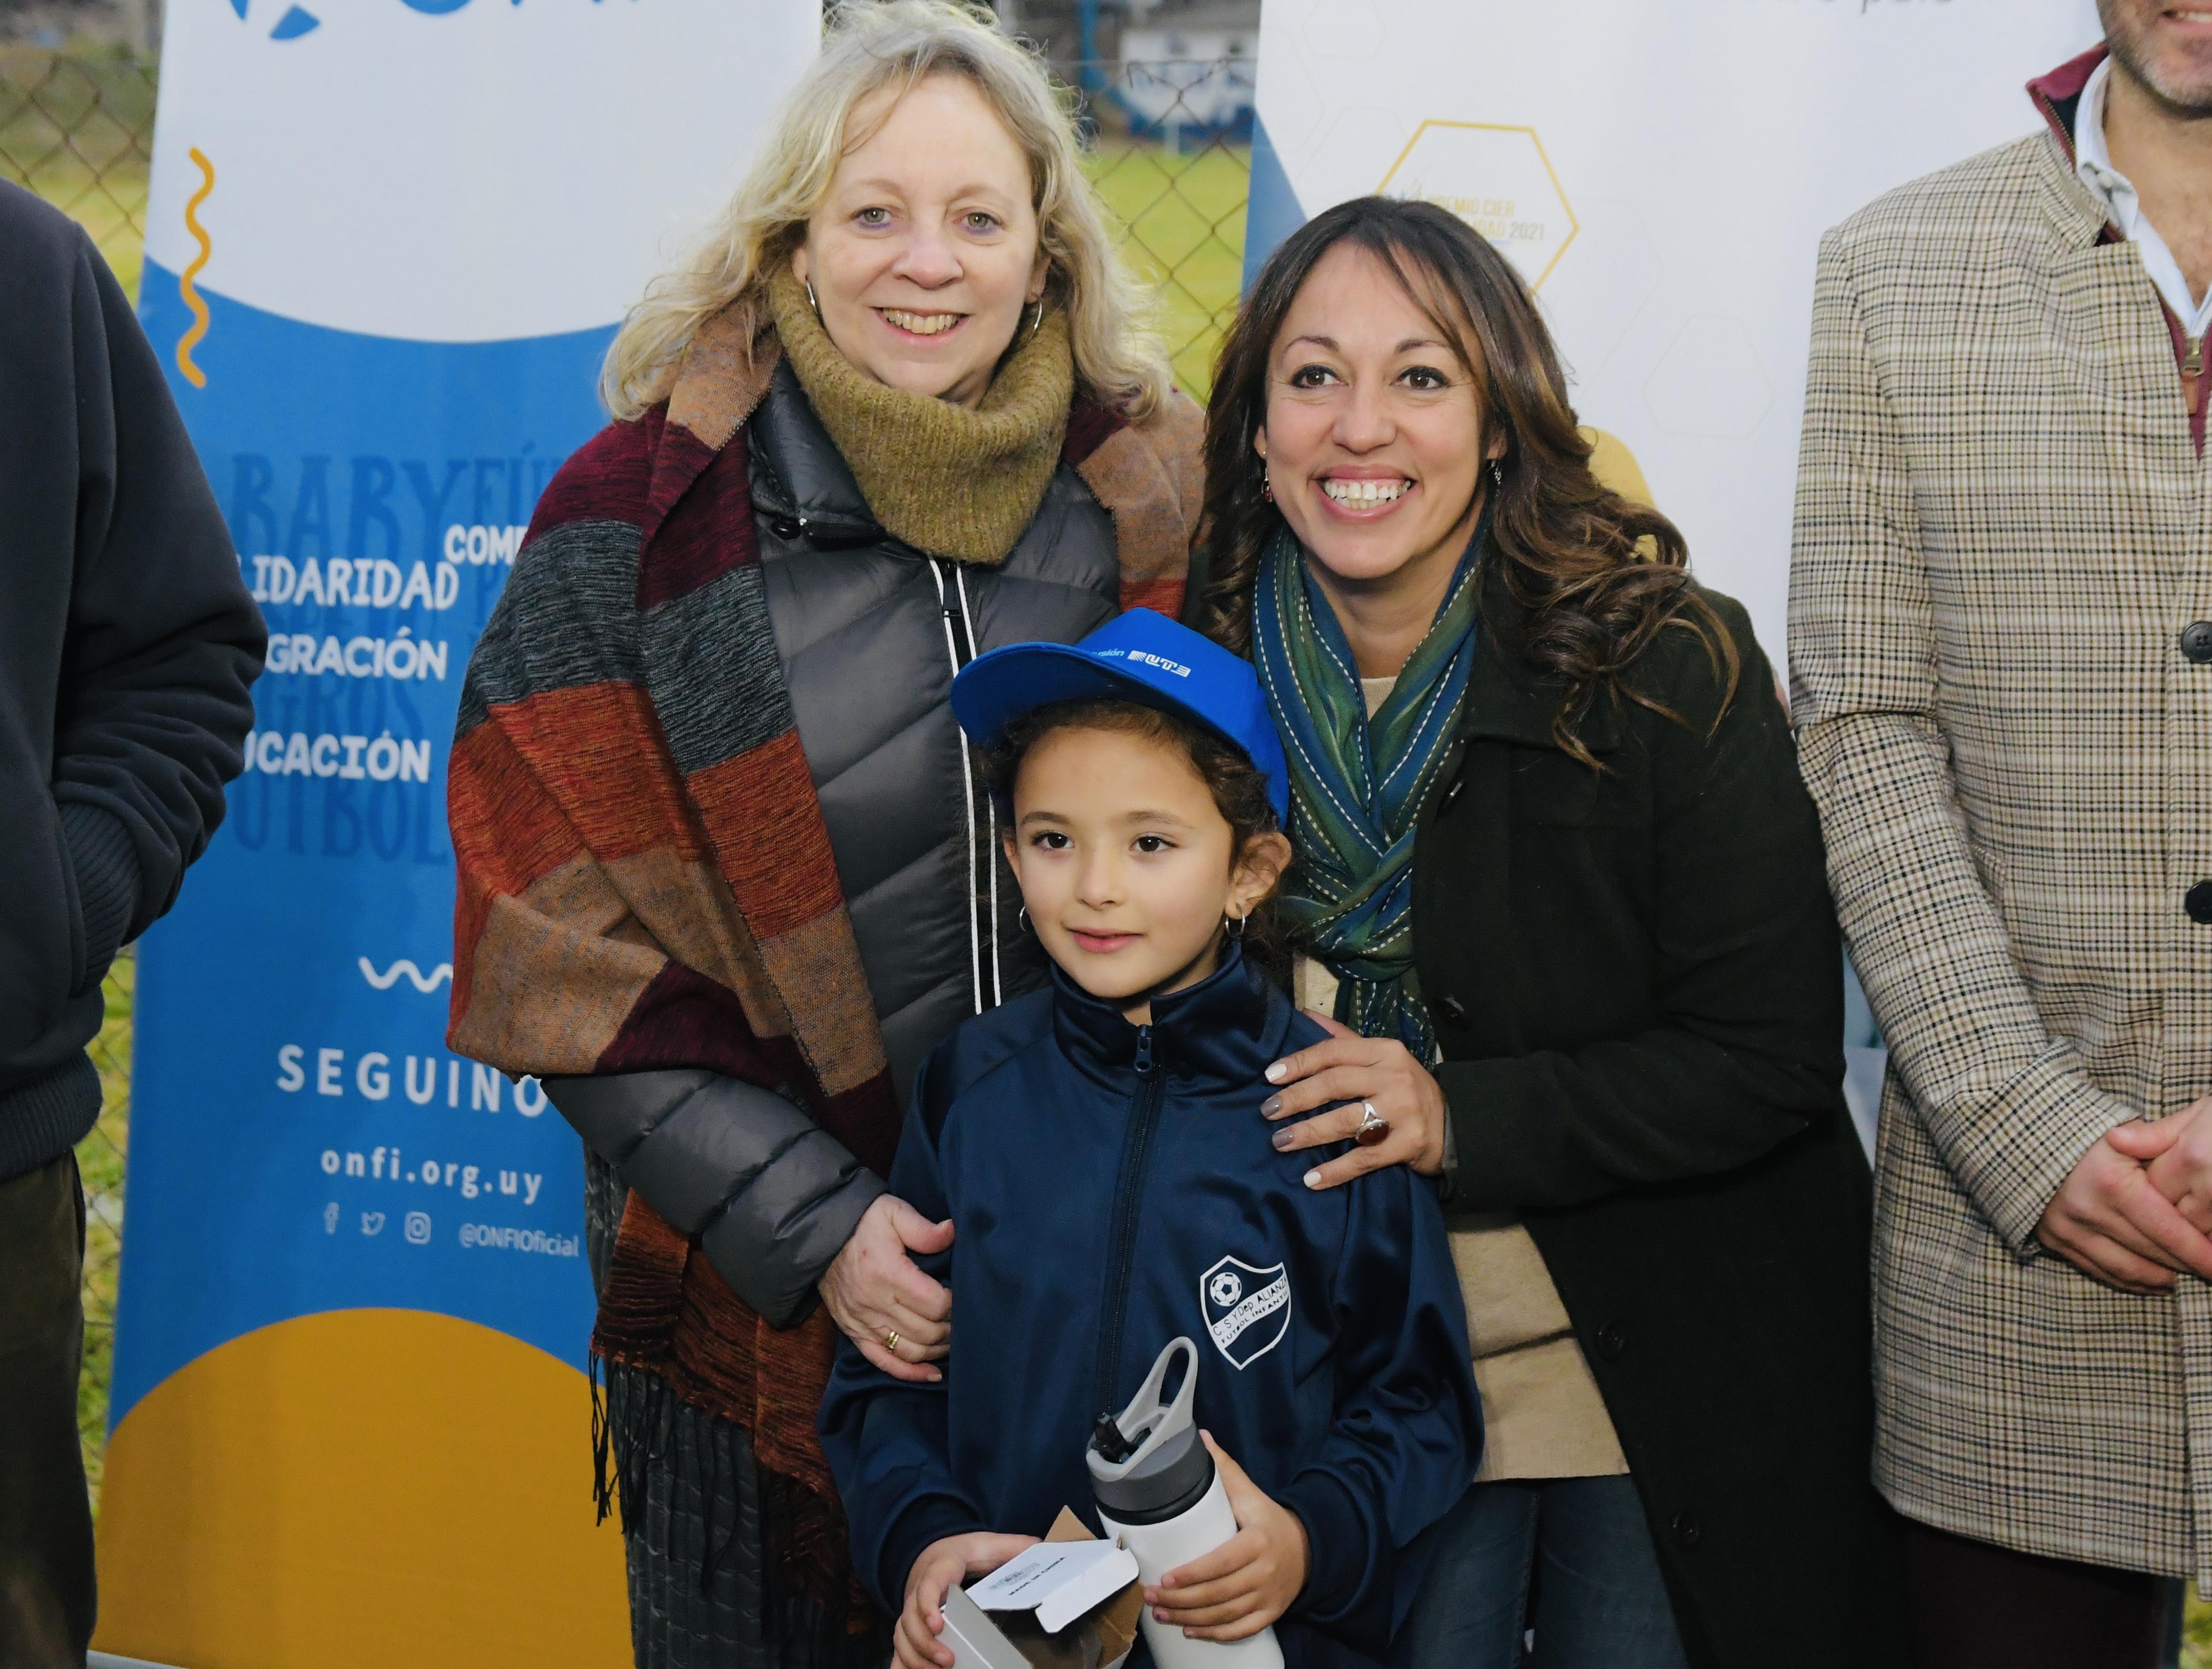 Silvia Emaldi y Fernanda Cardona junto a una niña jugadora de futbol infantil